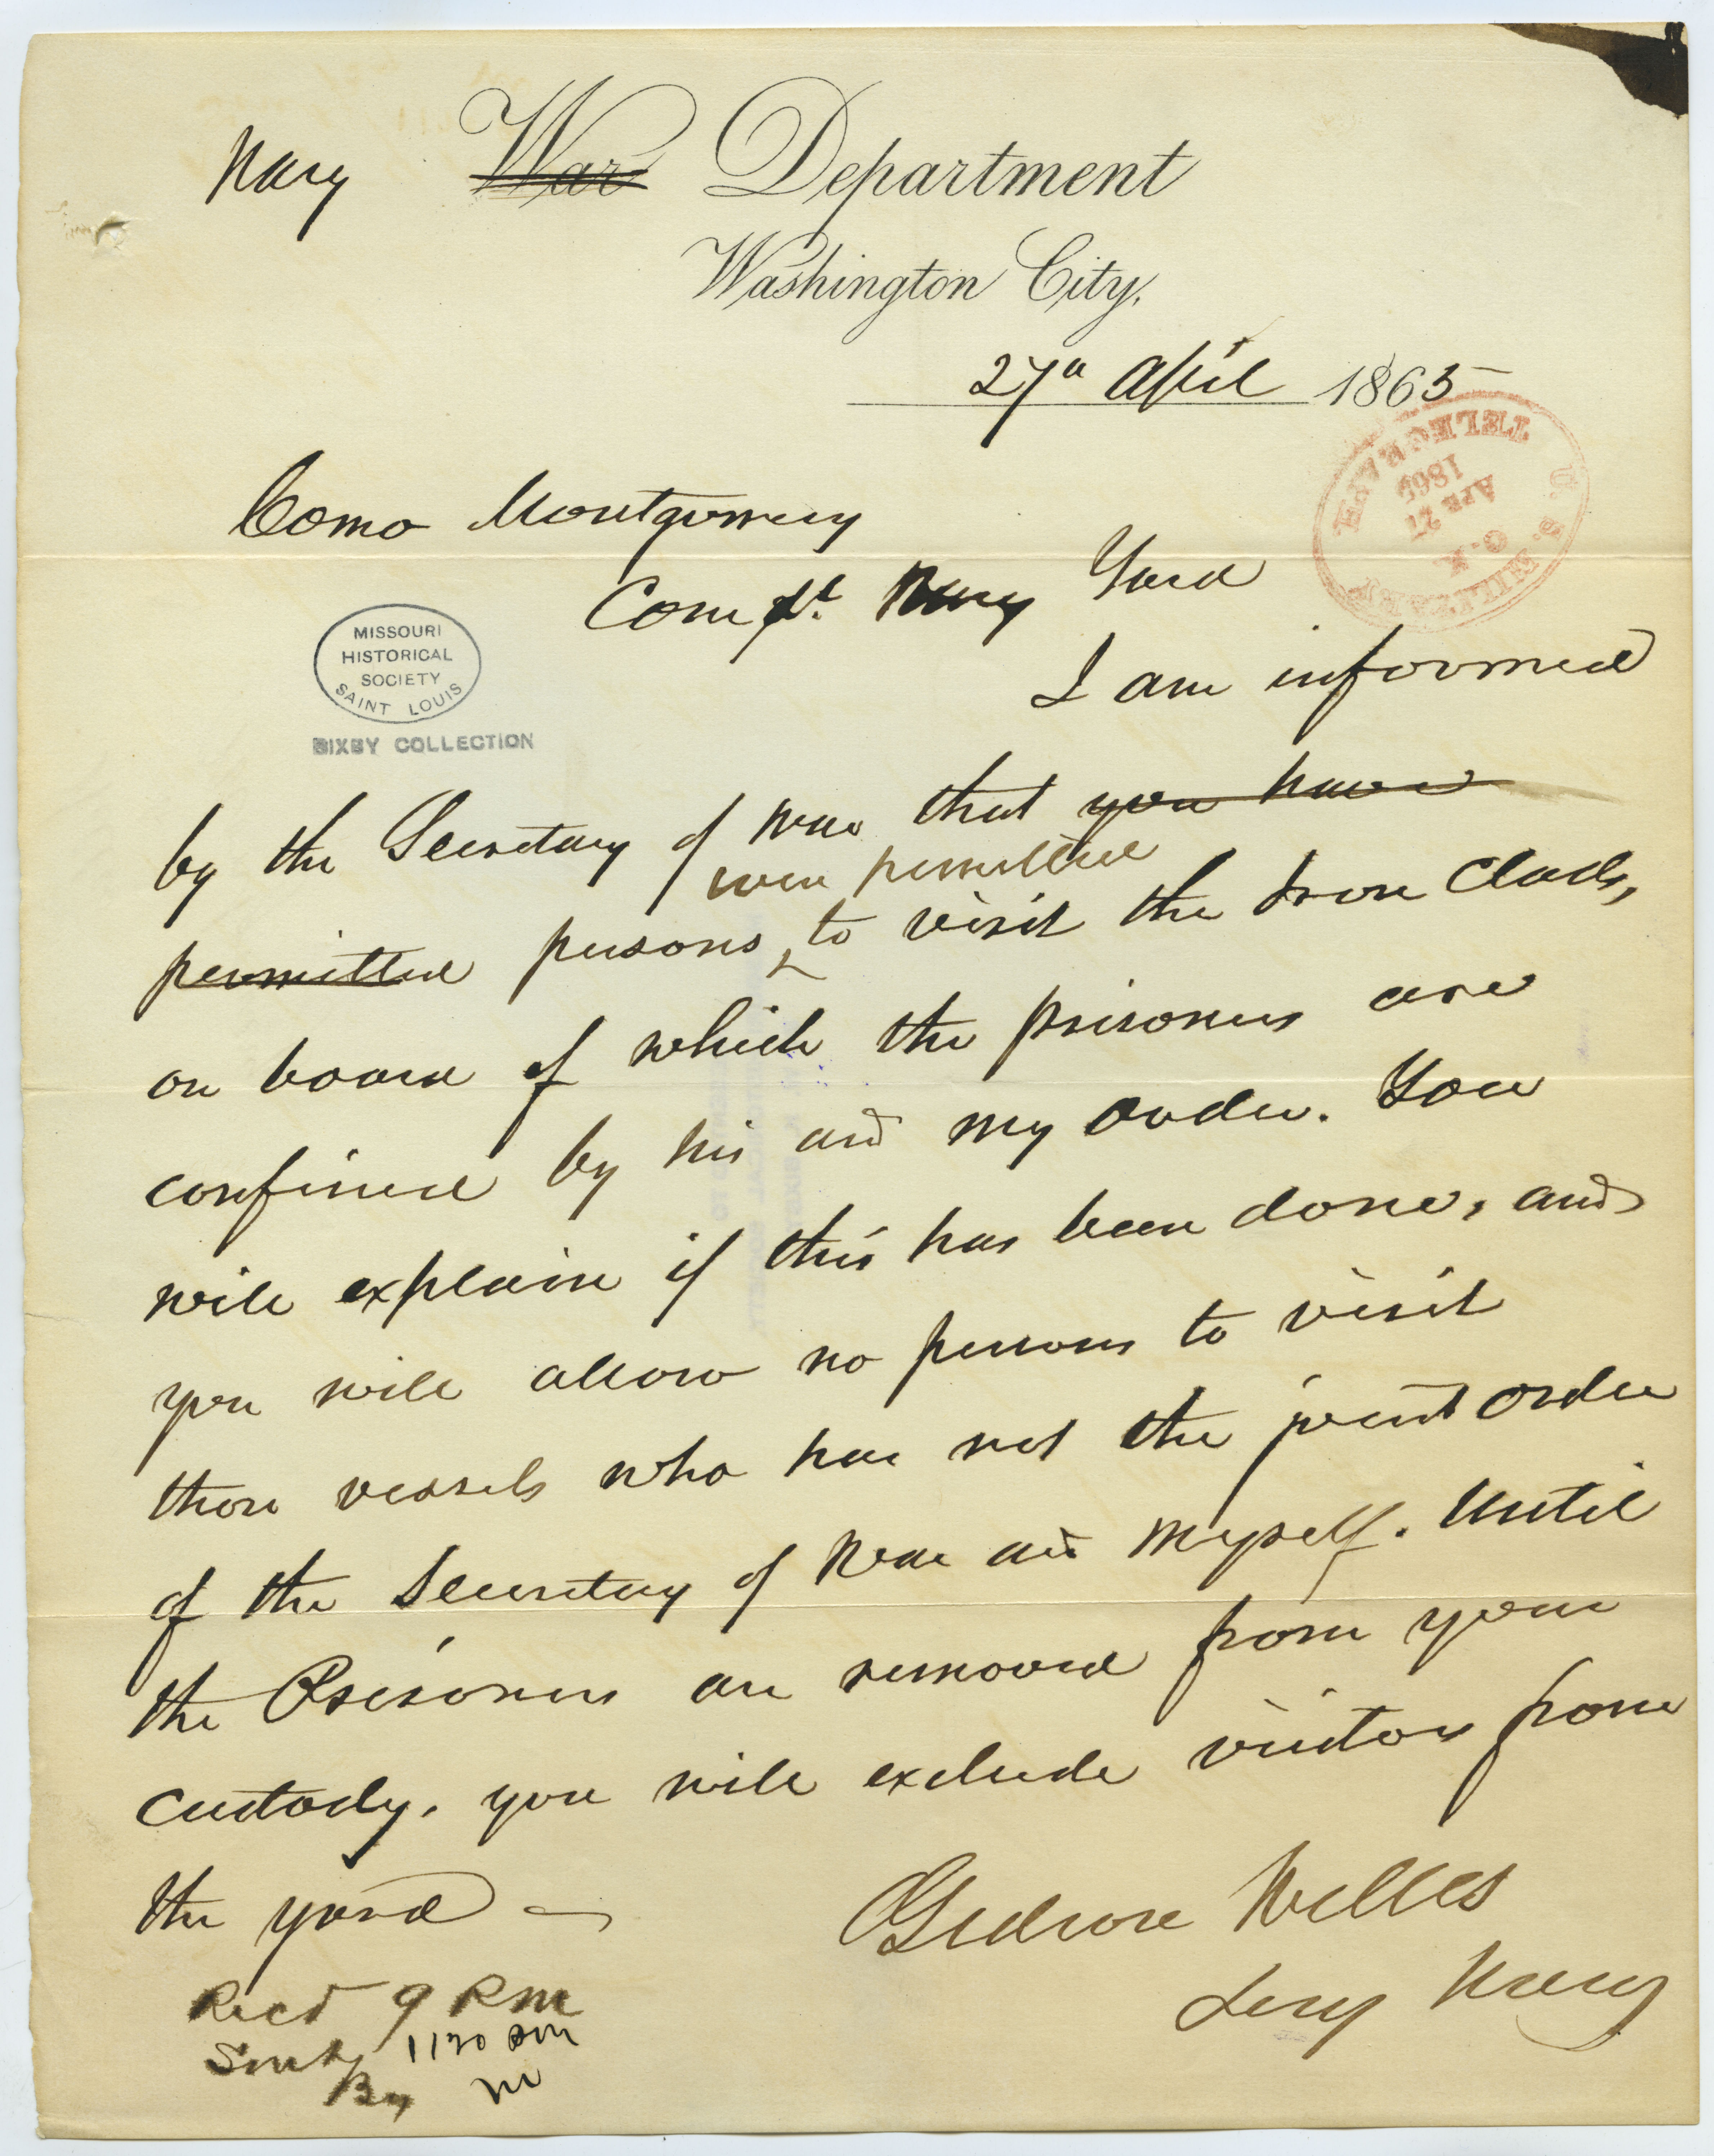 Contemporary copy of telegram of Gideon Welles, Secy. Navy, Navy Department, Washington City, to Comd. Montgomery [J.B. Montgomery], Comdt. Navy Yard, April 27, 1865